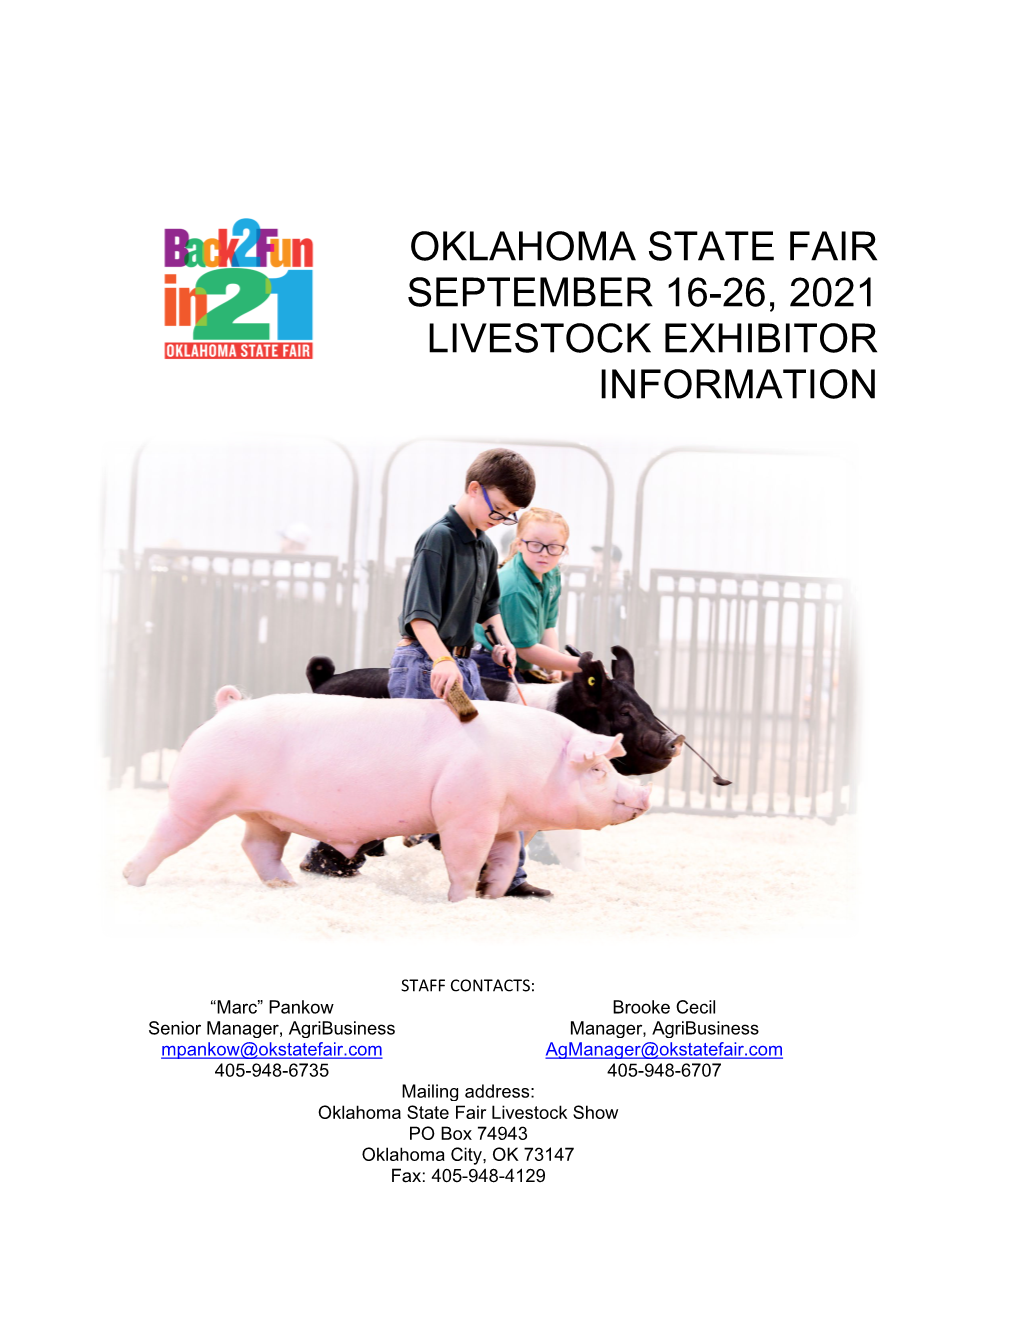 Oklahoma State Fair September 16-26, 2021 Livestock Exhibitor Information